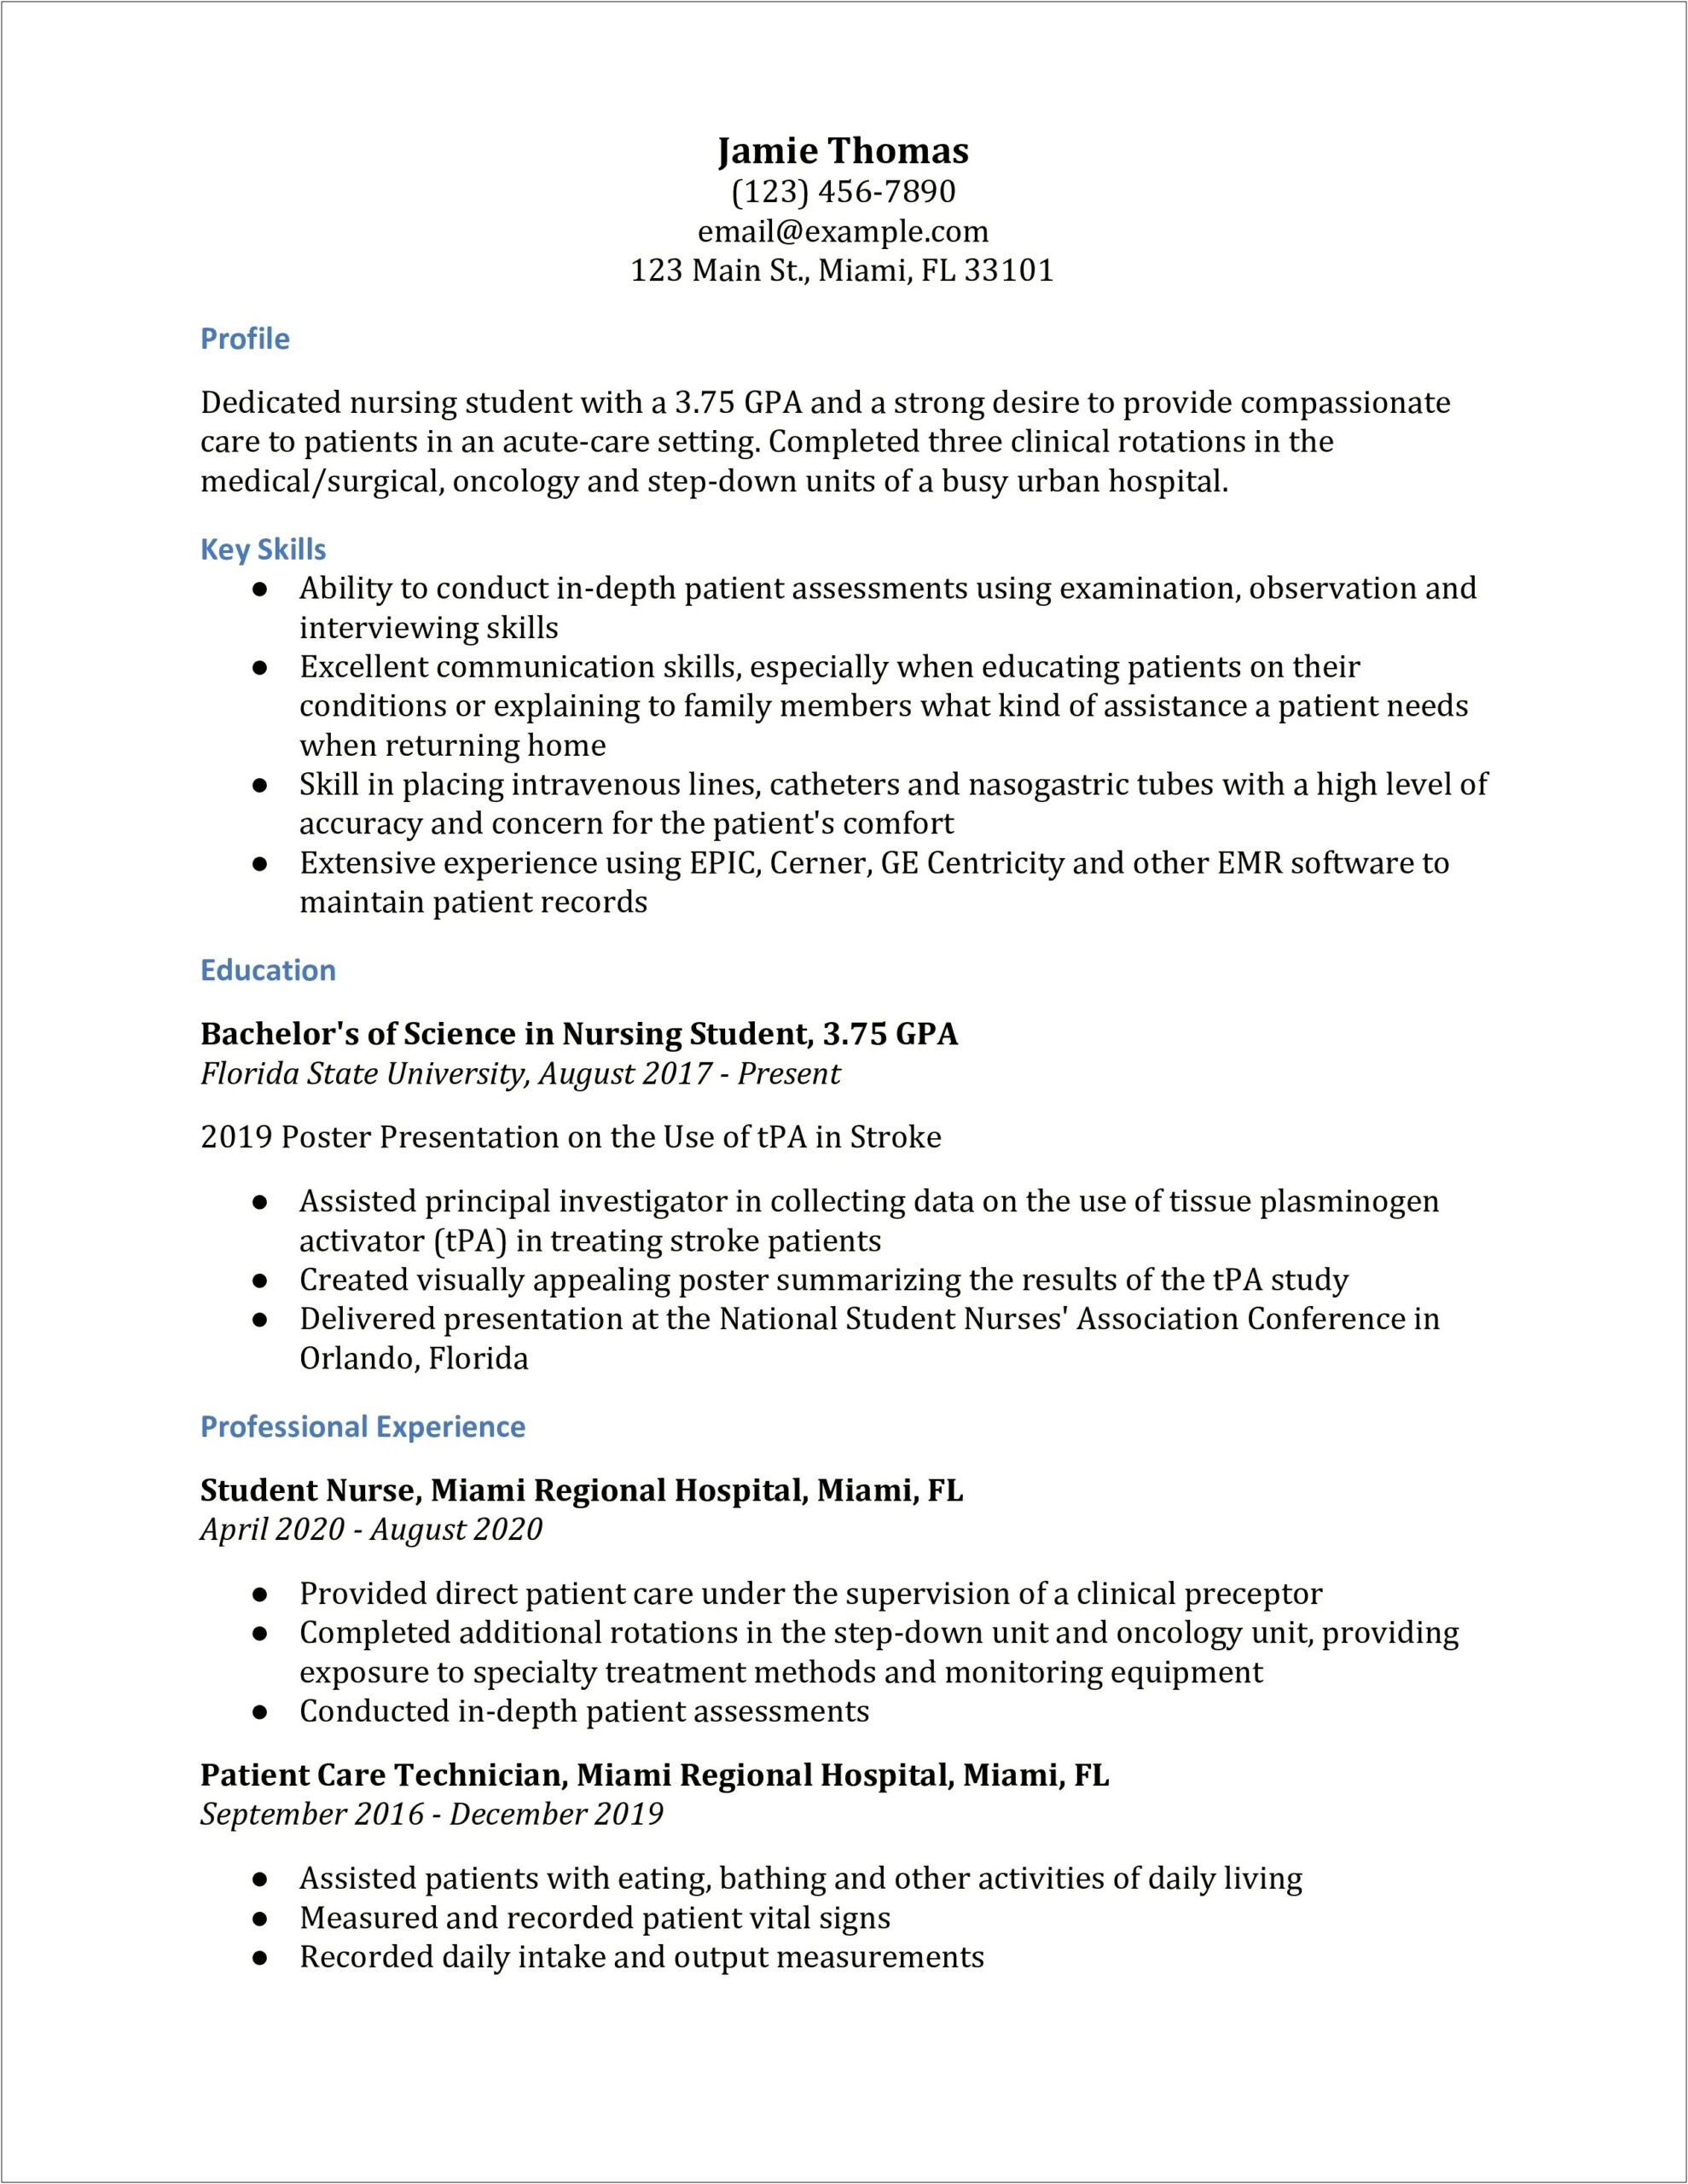 Sample Resume For Nursing Students Applicants